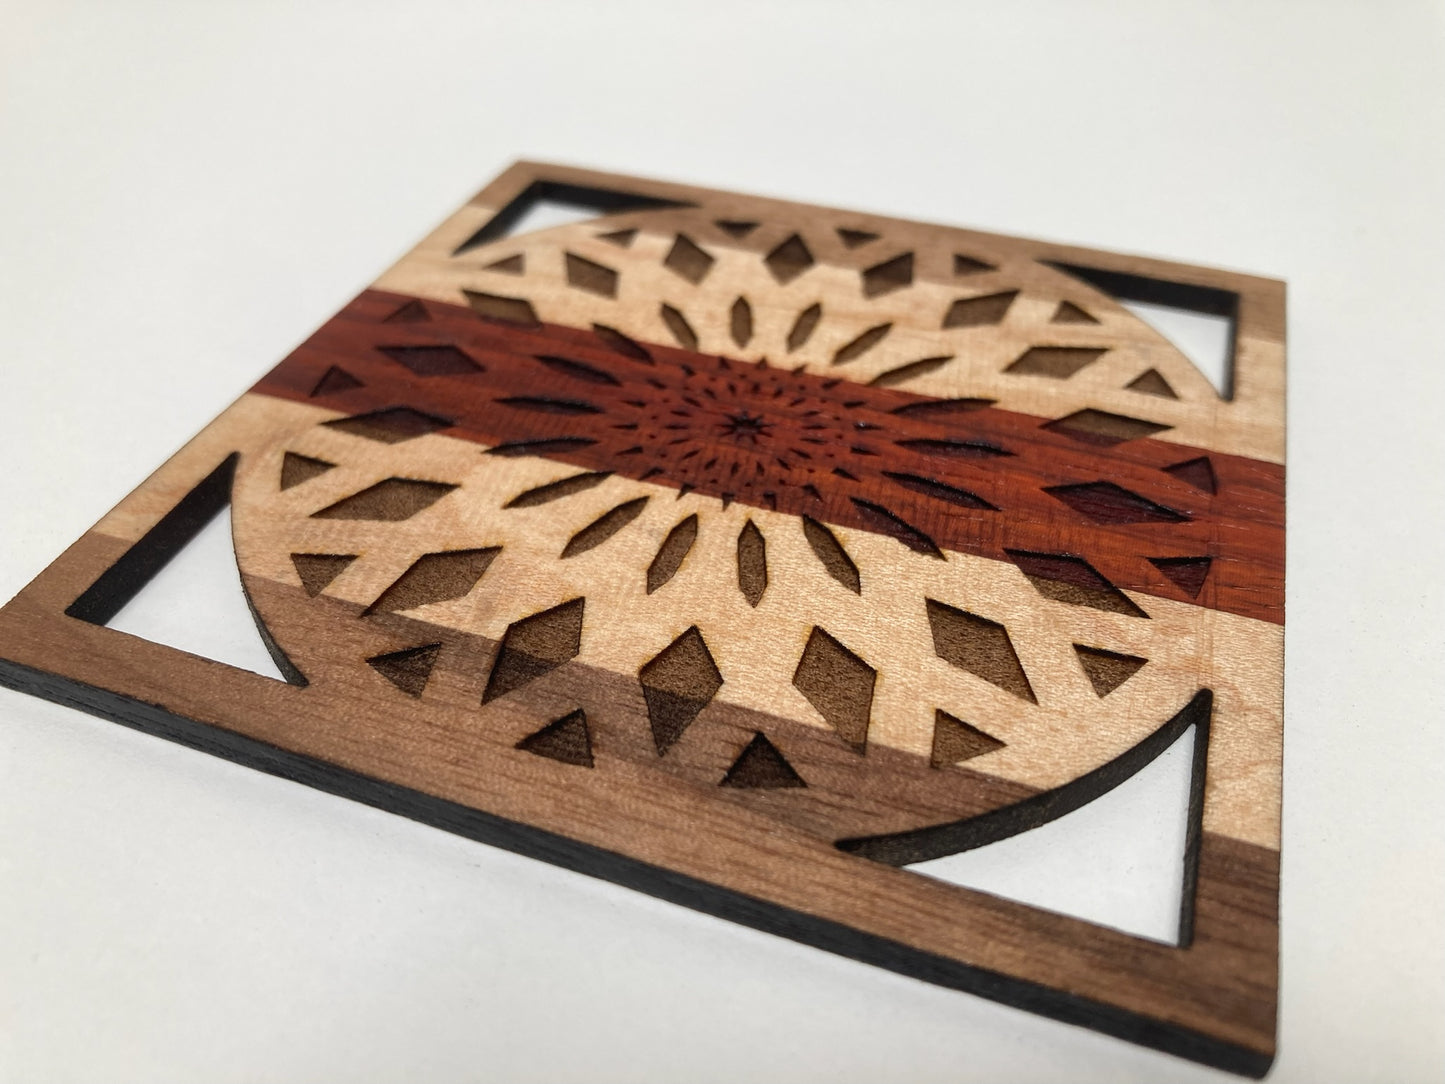 Mandala Design Coasters